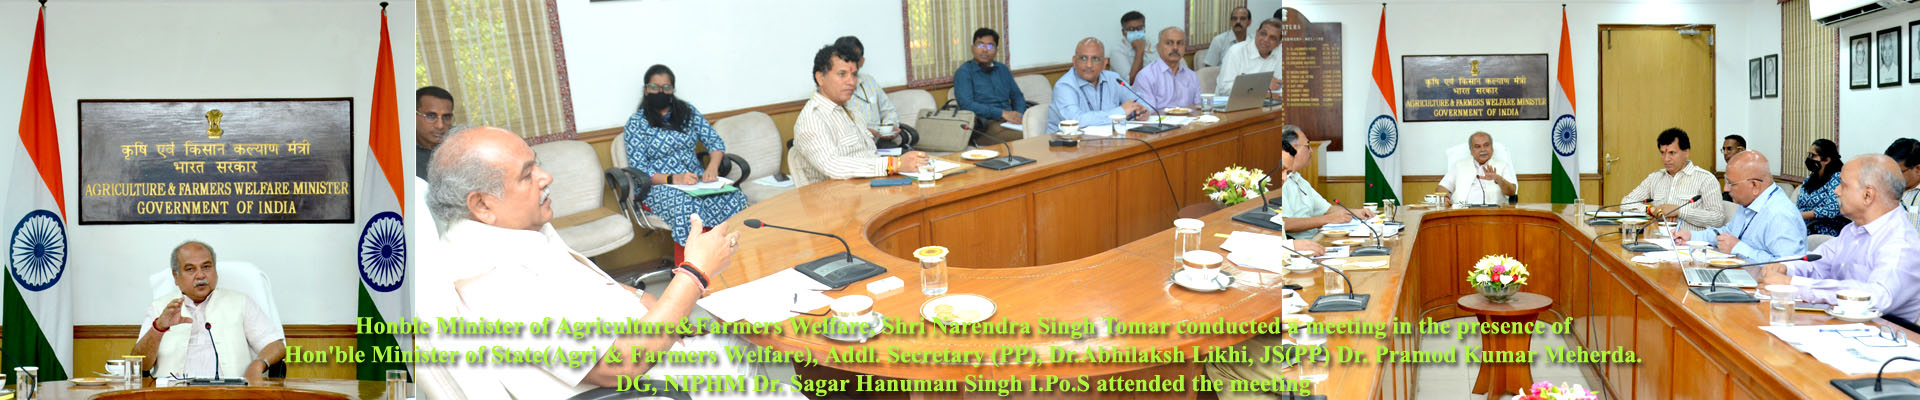 Honble Minister of Agriculture&Farmers Welfare, Shri Narendra Singh Tomar conducted a meeting in the presence of 
Hon'ble Minister of State(Agri & Farmers Welfare), Addl. Secretary (PP), Dr.Abhilaksh Likhi, JS(PP) Dr. Pramod Kumar Meherda.
DG, NIPHM Dr. Sagar Hanuman Singh I.Po.S attended the meeting